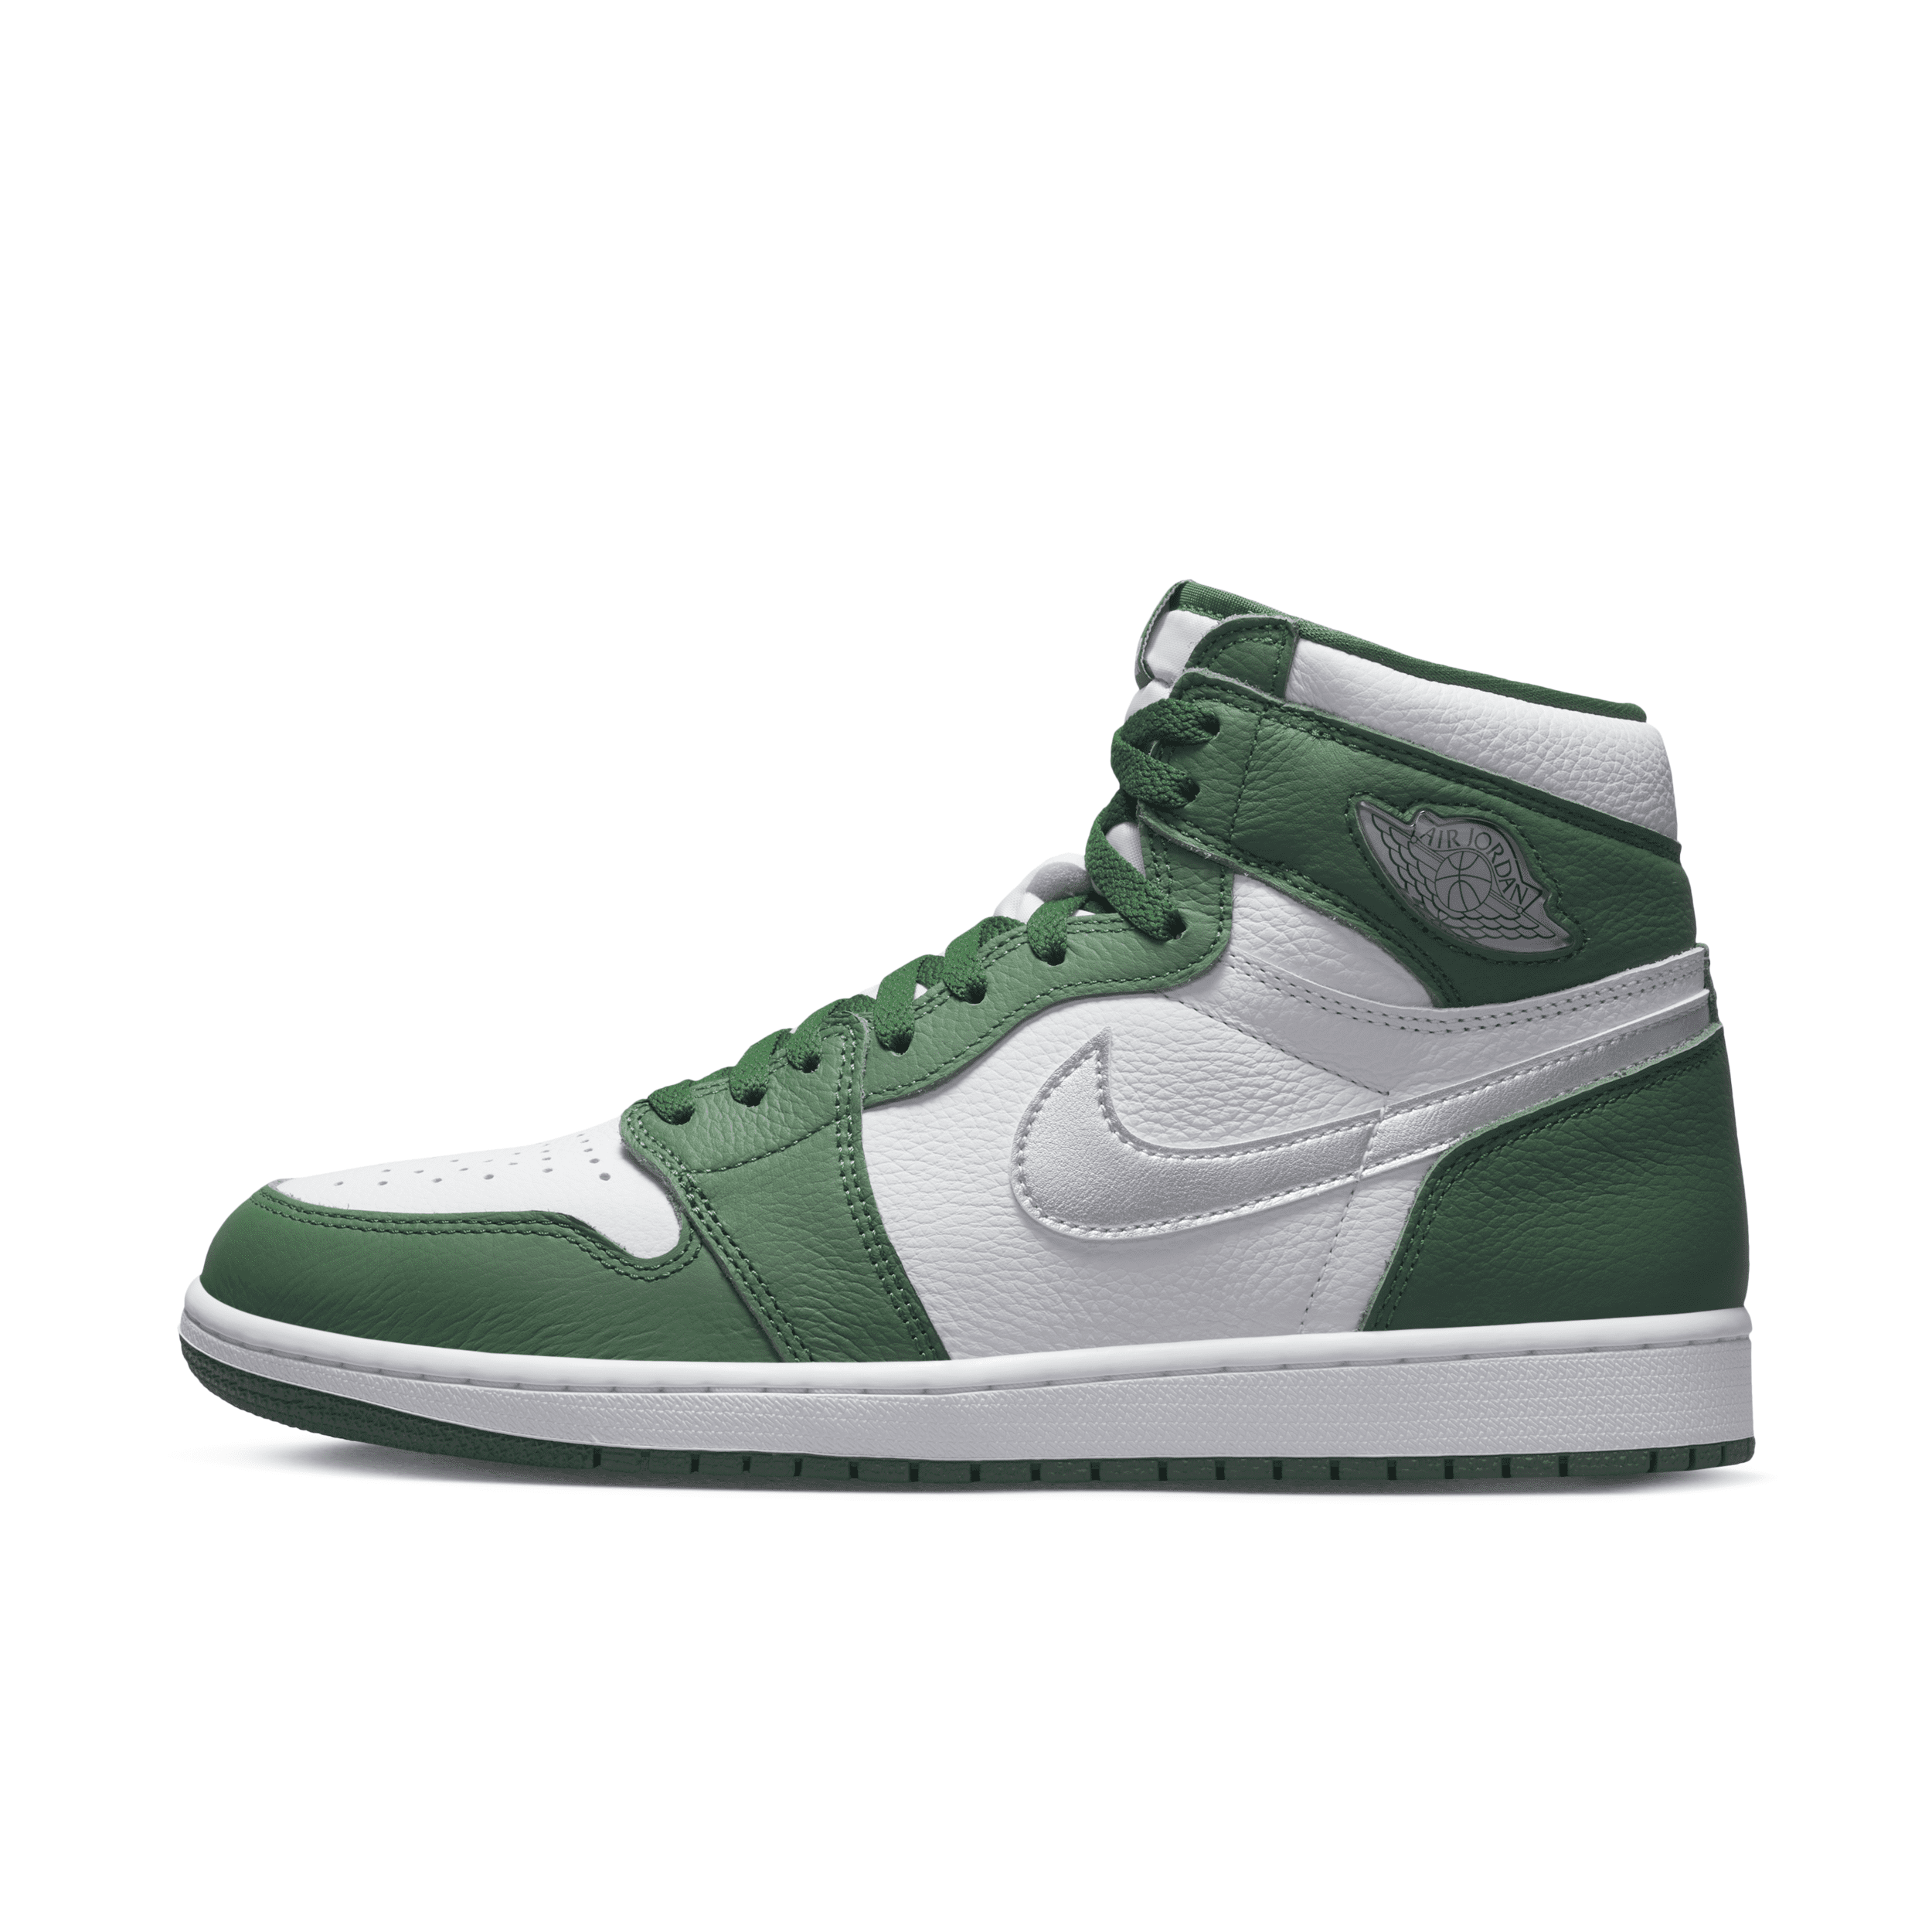 Men's Air Jordan 1 Retro High OG Shoes in Green, Size: 11.5 | DZ5485-303